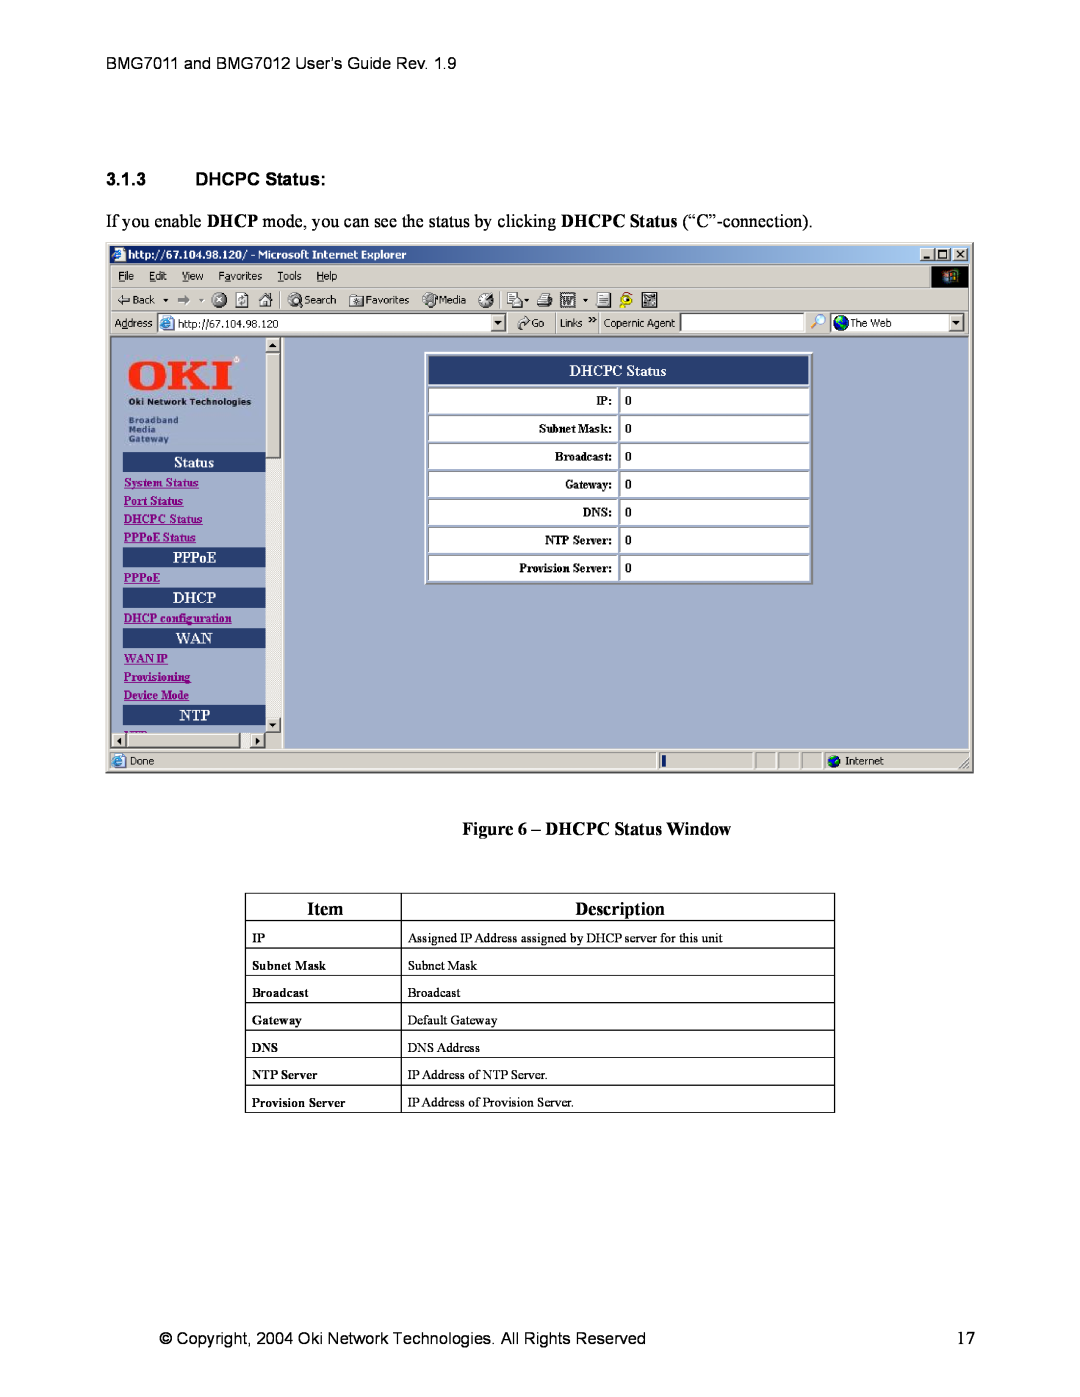 Oki BMG7011, BMG7012 manual 3.1.3DHCPC Status, DHCPC Status Window, Description 